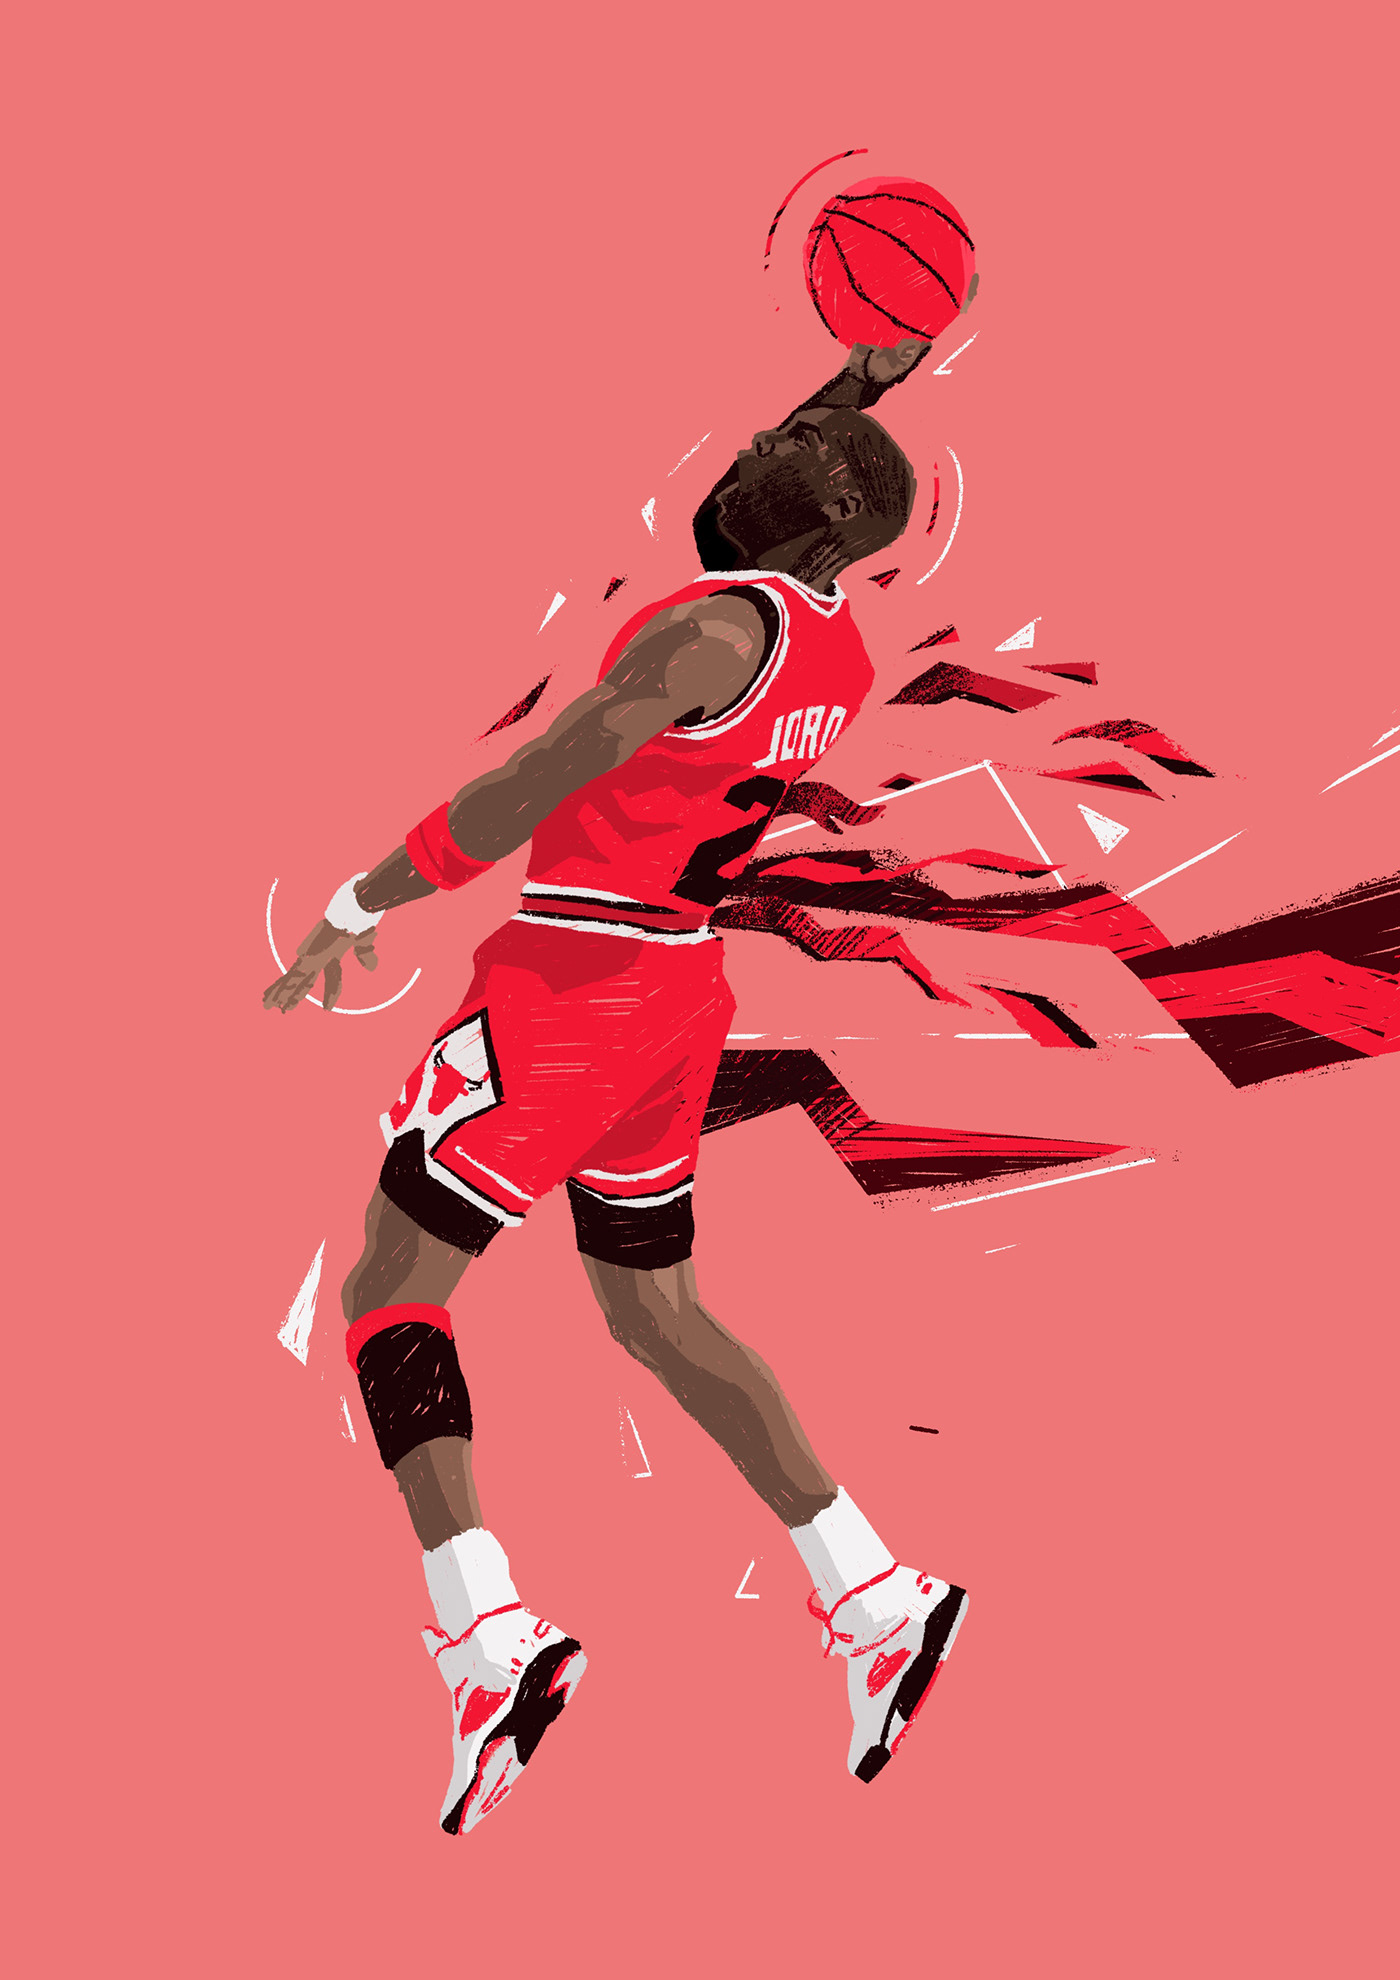 Basketball illustrated basketball players Character illustrations modern visuals moving illustrations NBA NBA Illustrations NBA Players procreate illustrations Sport people illustrated